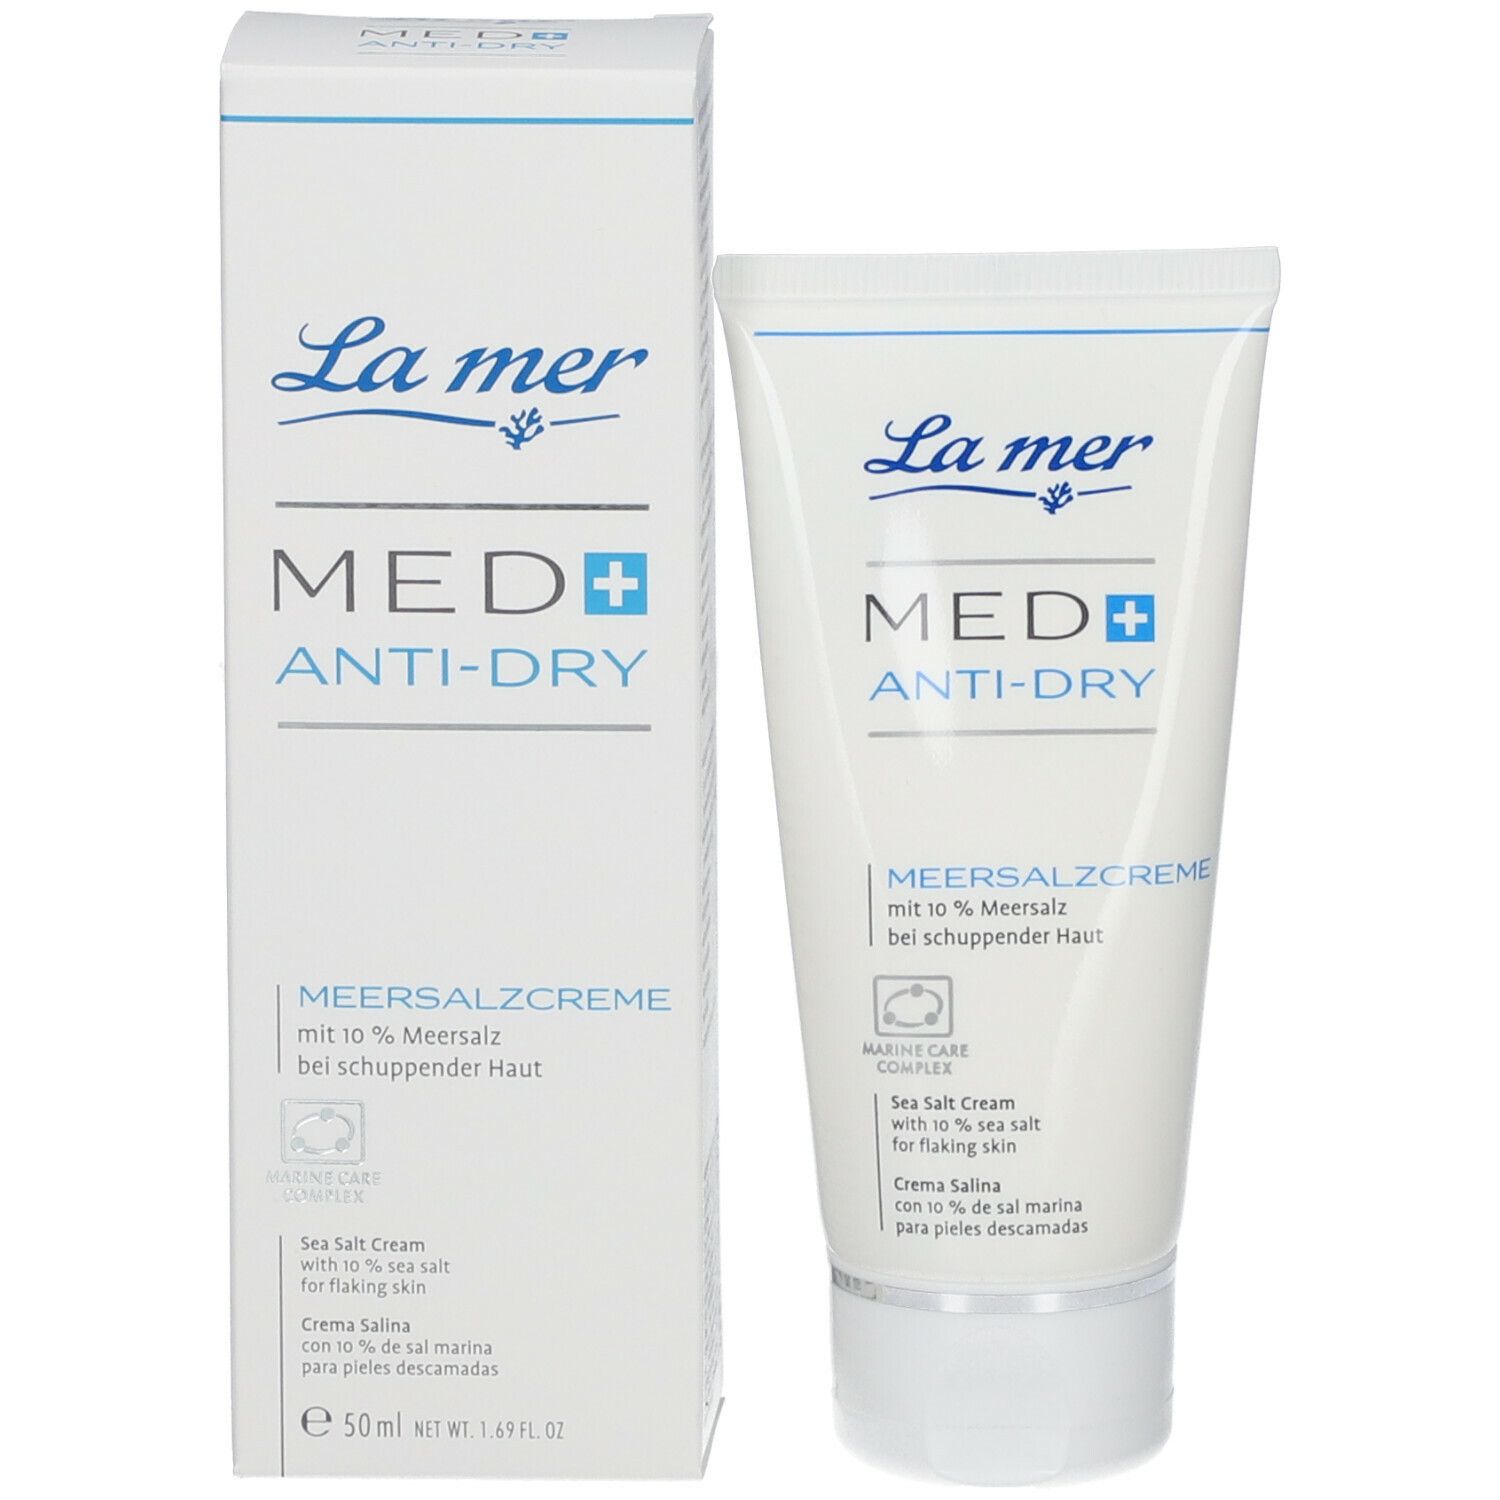 LA MER MED+ Anti-Dry Meersalzcreme ohne Parfum